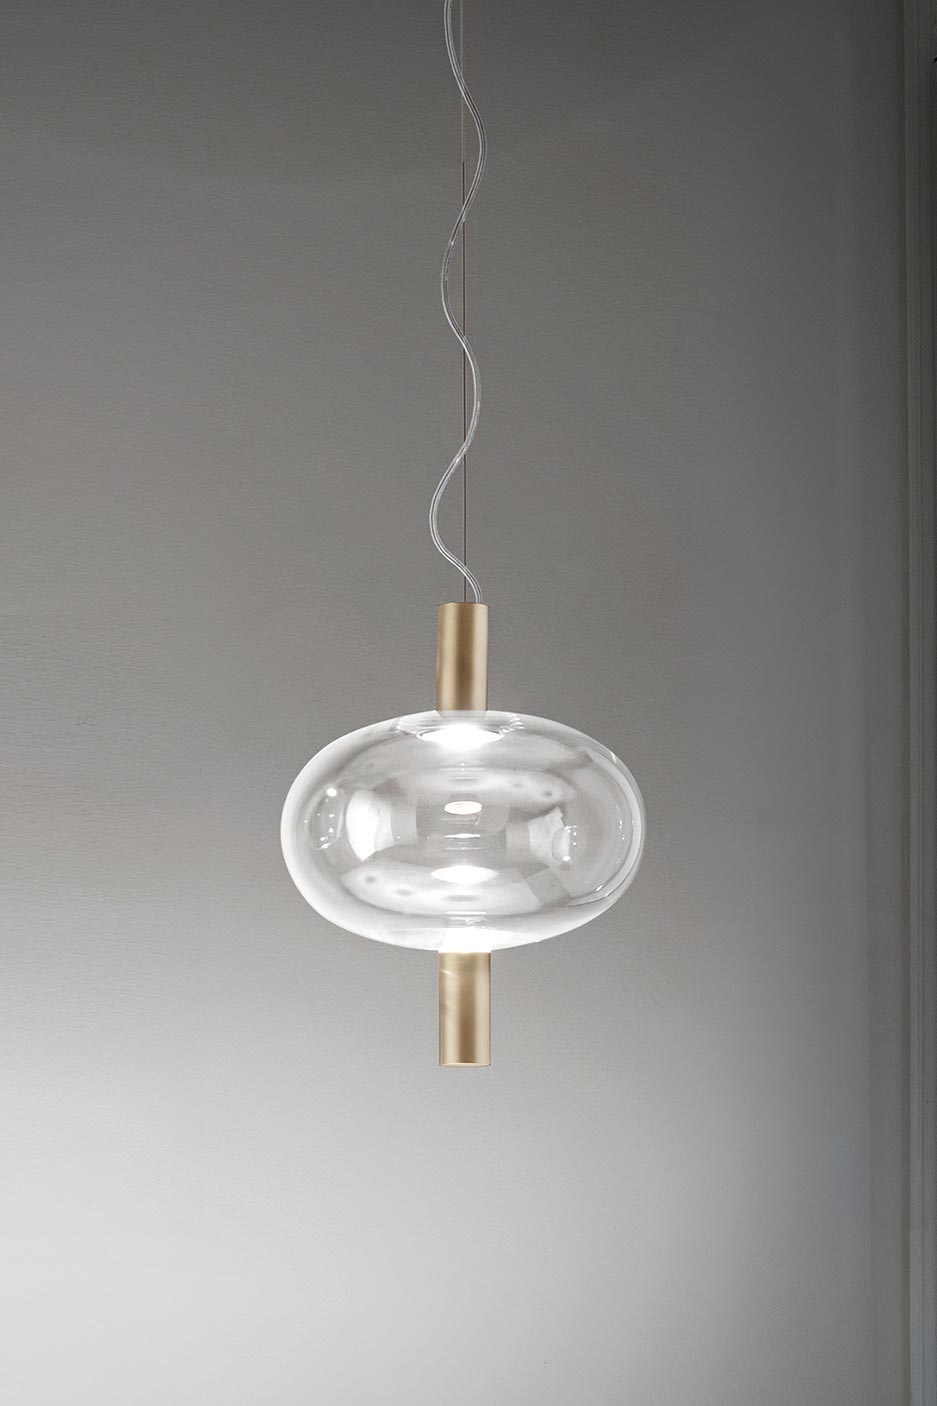 Reflex suspension contemporaine ovale à éclairage LED. Vistosi. 